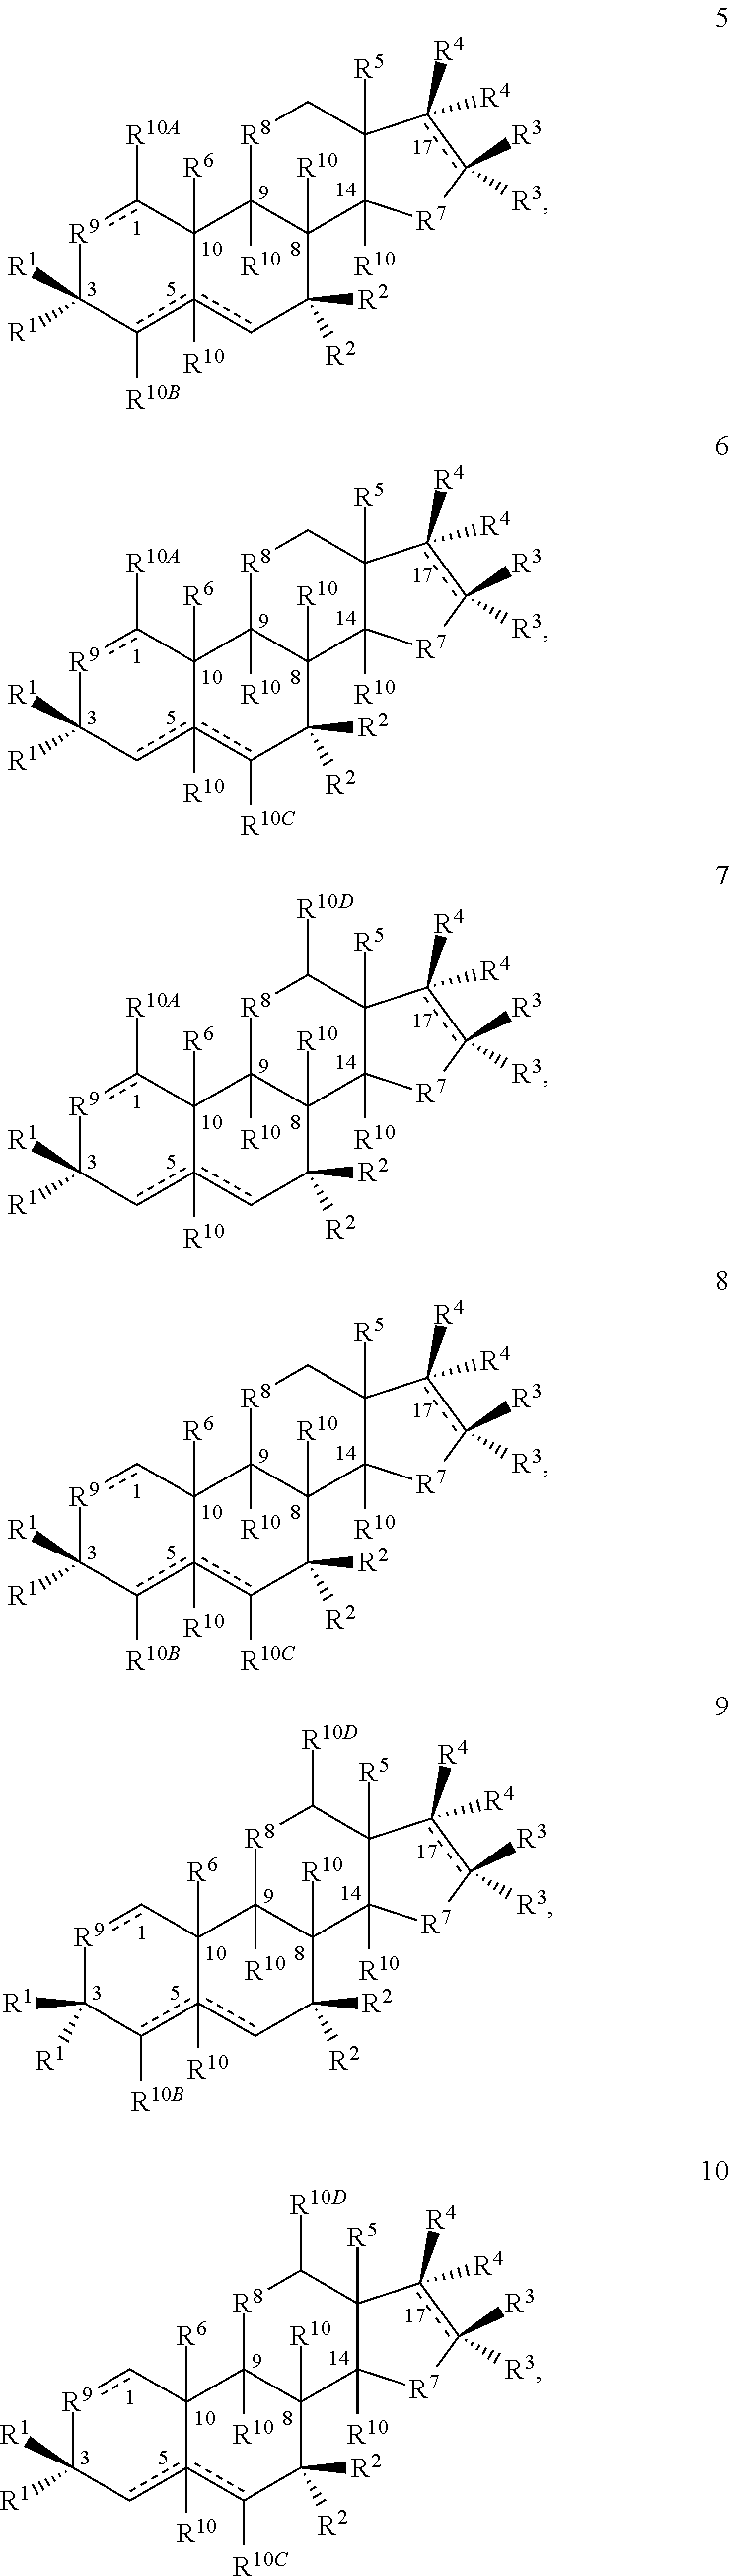 Steroids having 7-oxgen and 17-heteroaryl substitution